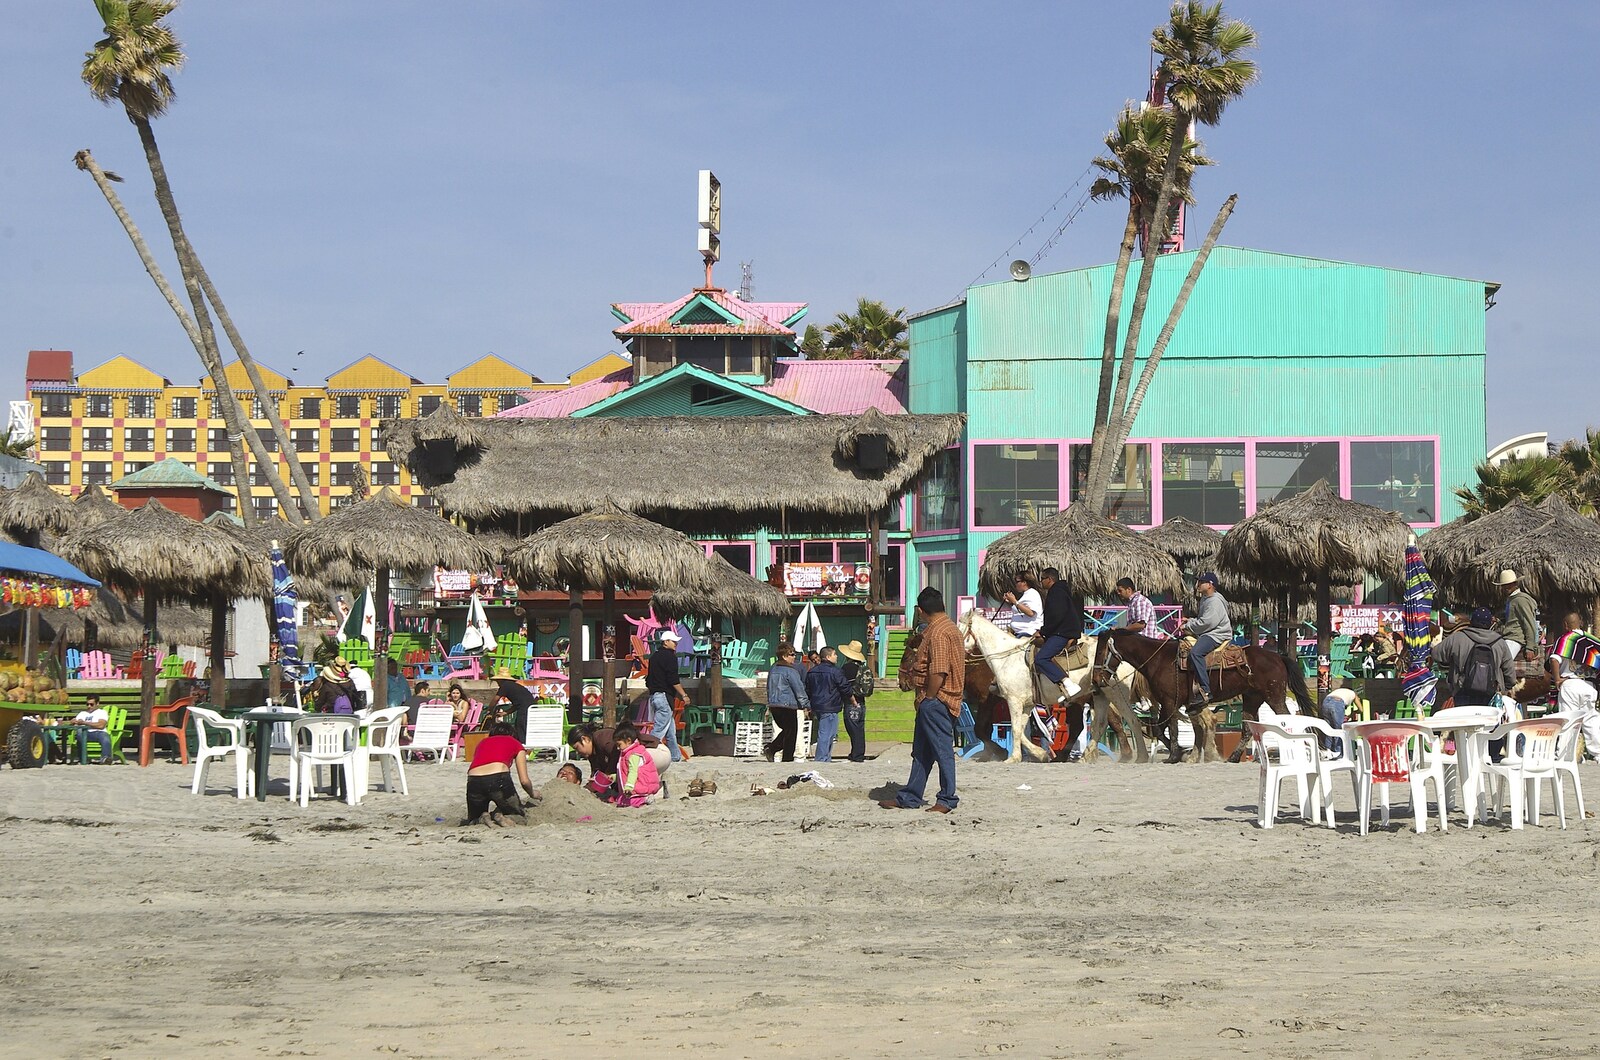 Rosarito and Tijuana, Baja California, Mexico - 2nd March 2008: Lurid buildings on the beach